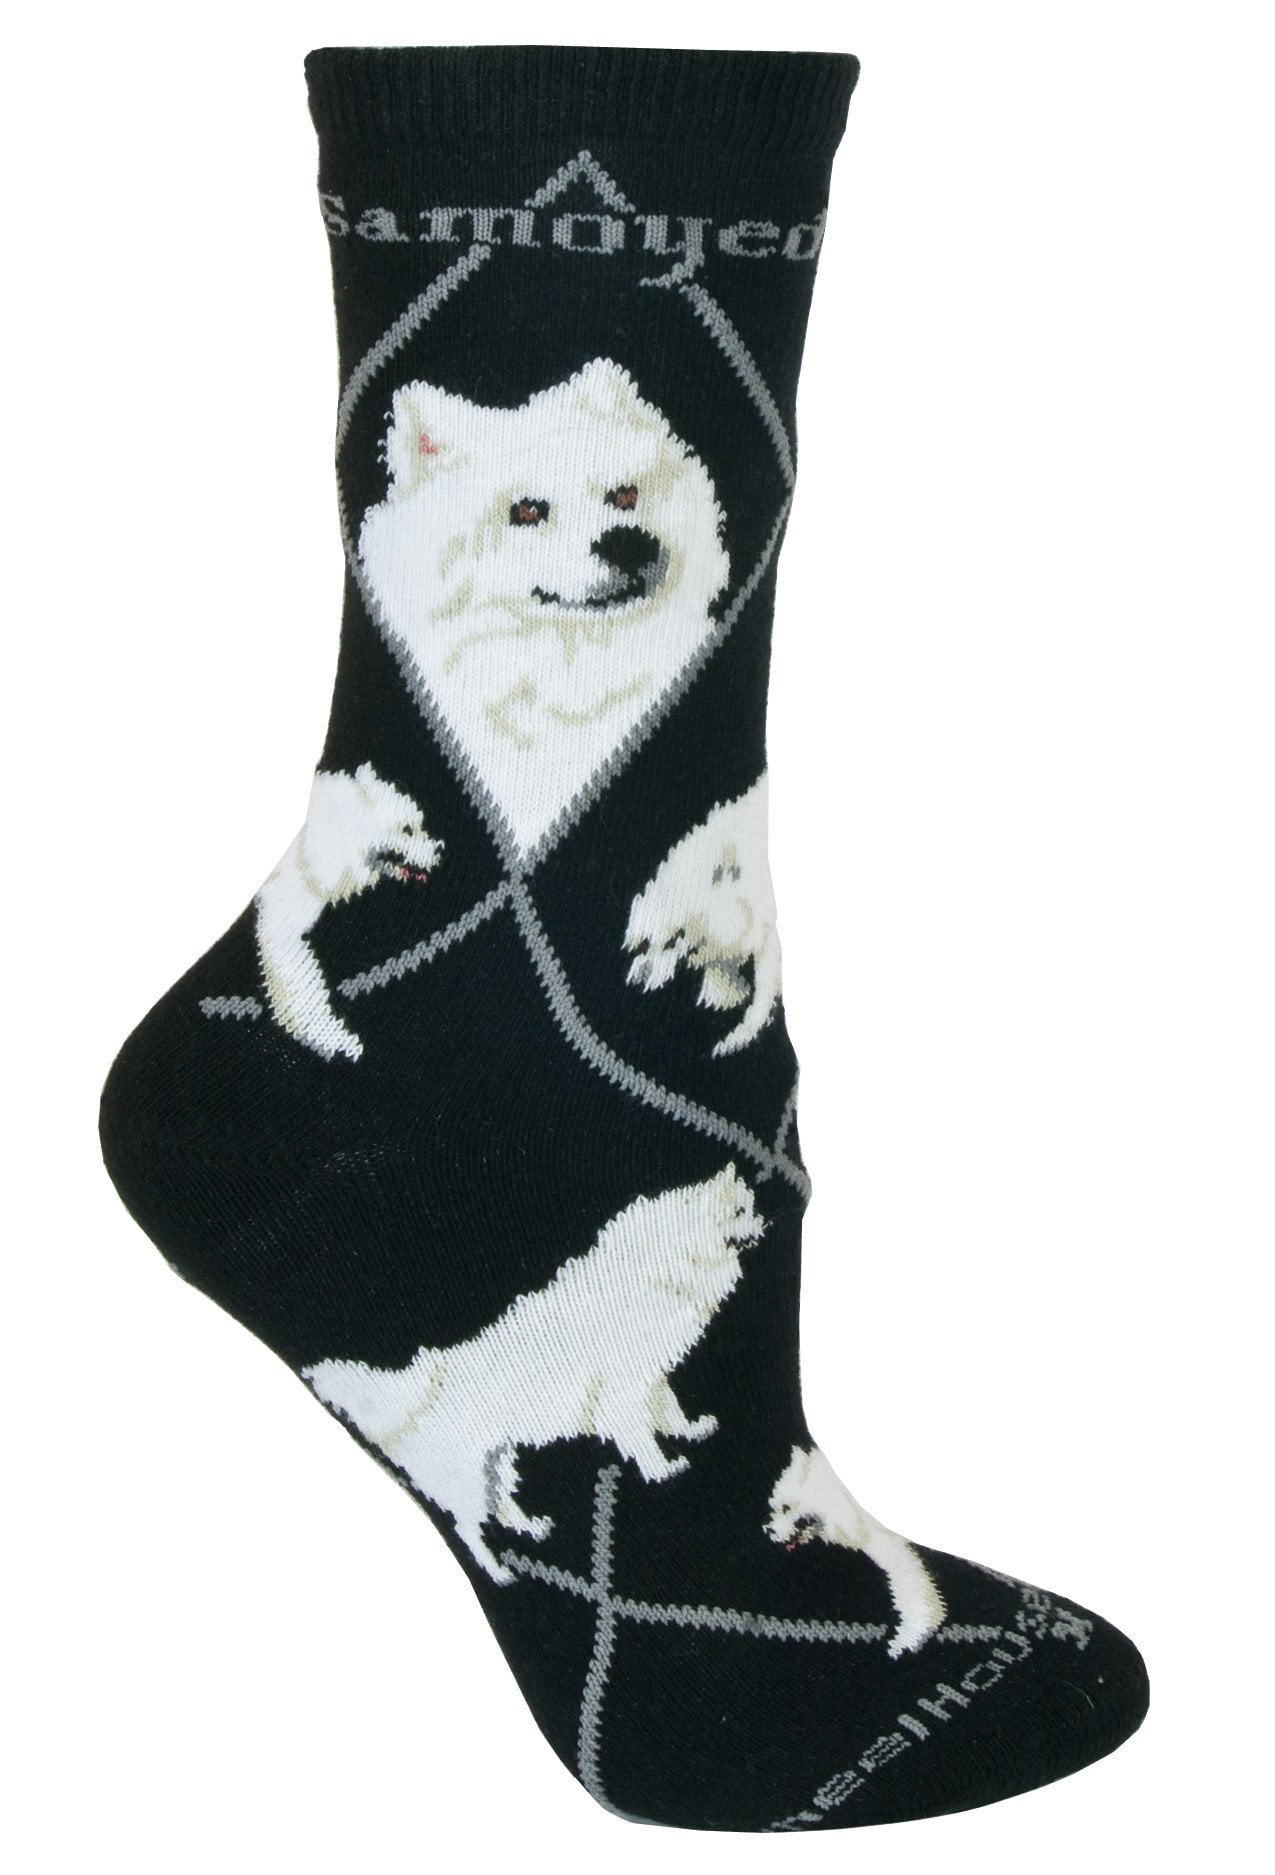 Samoyed Dog Heart Paws Fun Cool Novelty 7 in Men Women Socks 